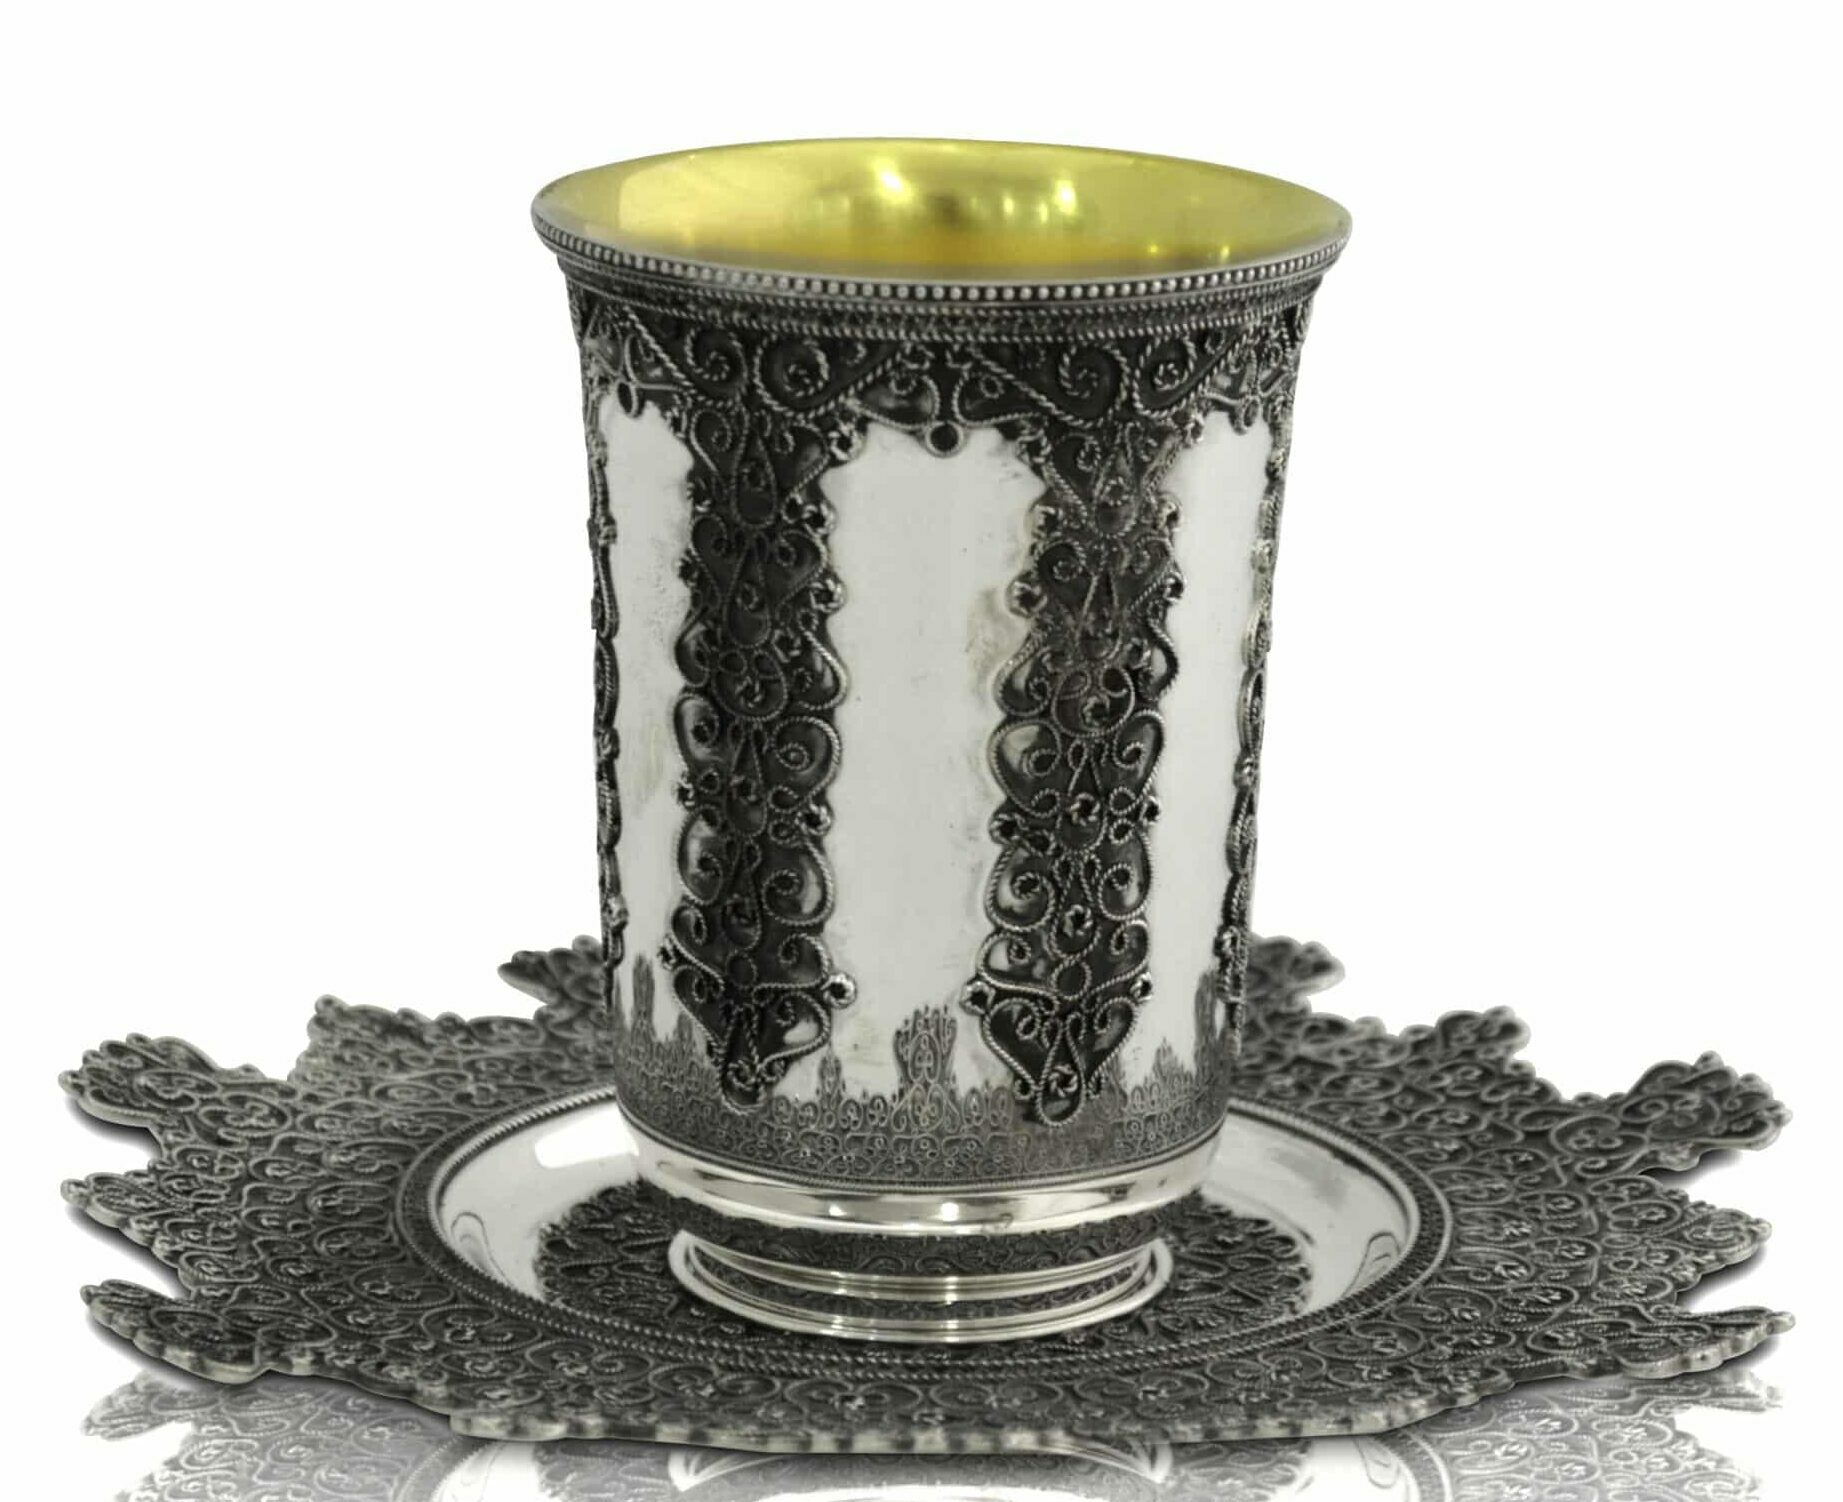 Silver Kiddush Cup with Unique Filigree